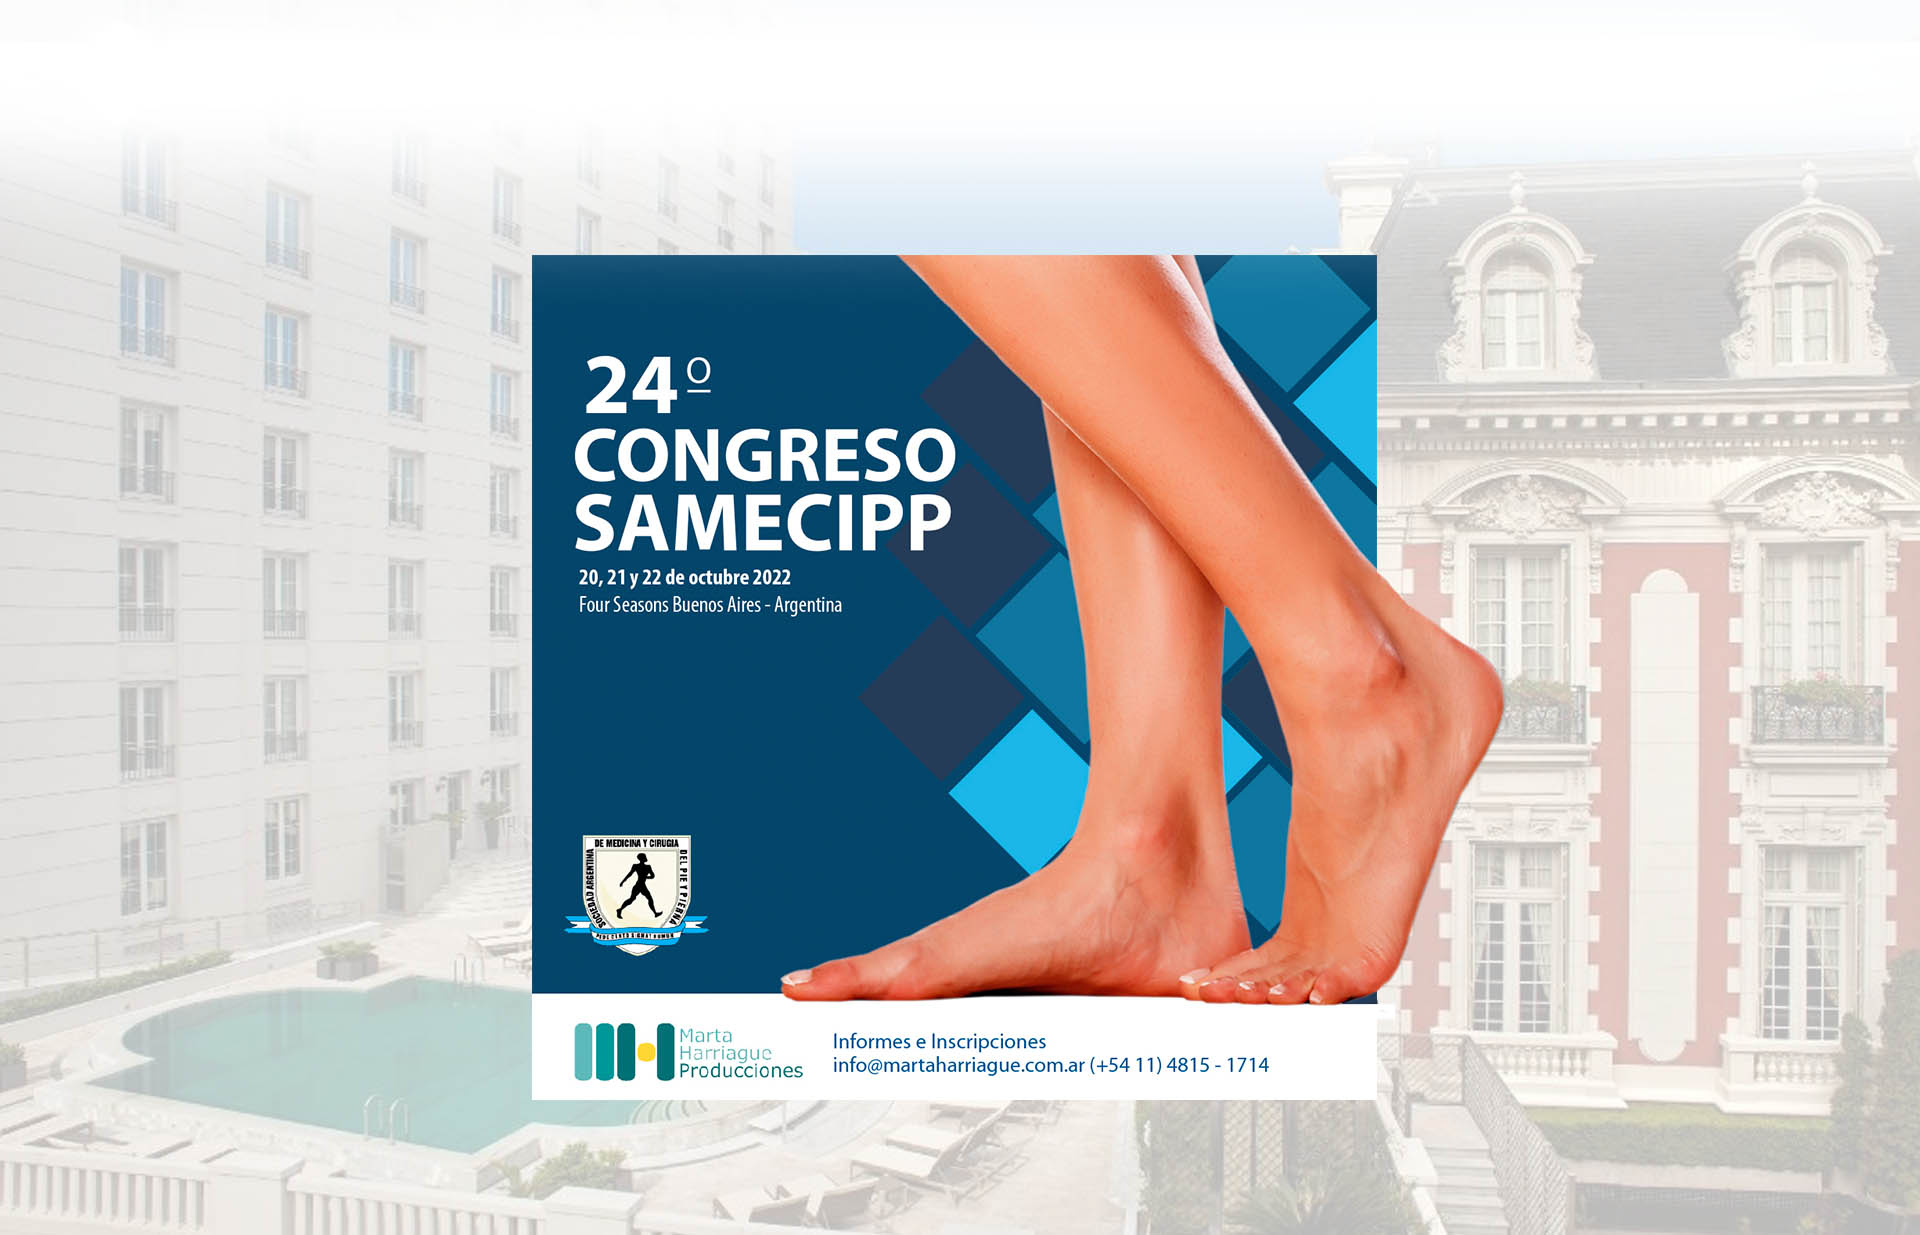 Congreso SAMeCiPP